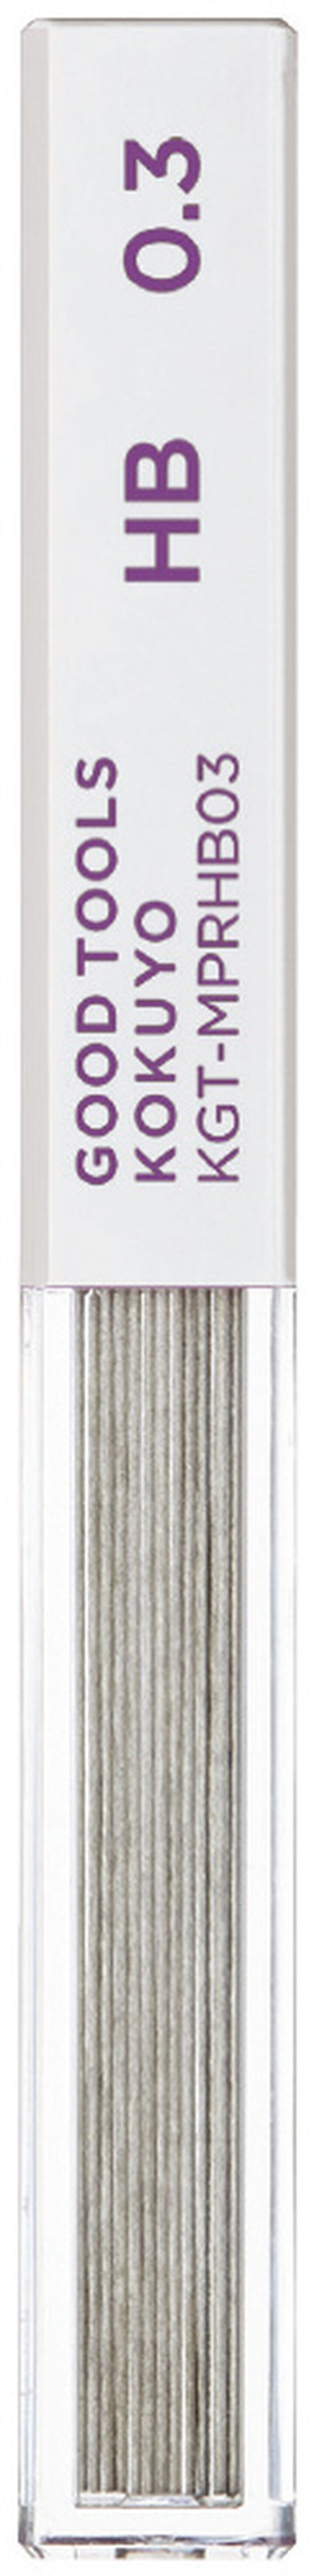 GOOD TOOLS Mechanical Pencil 0.3mm,White, medium